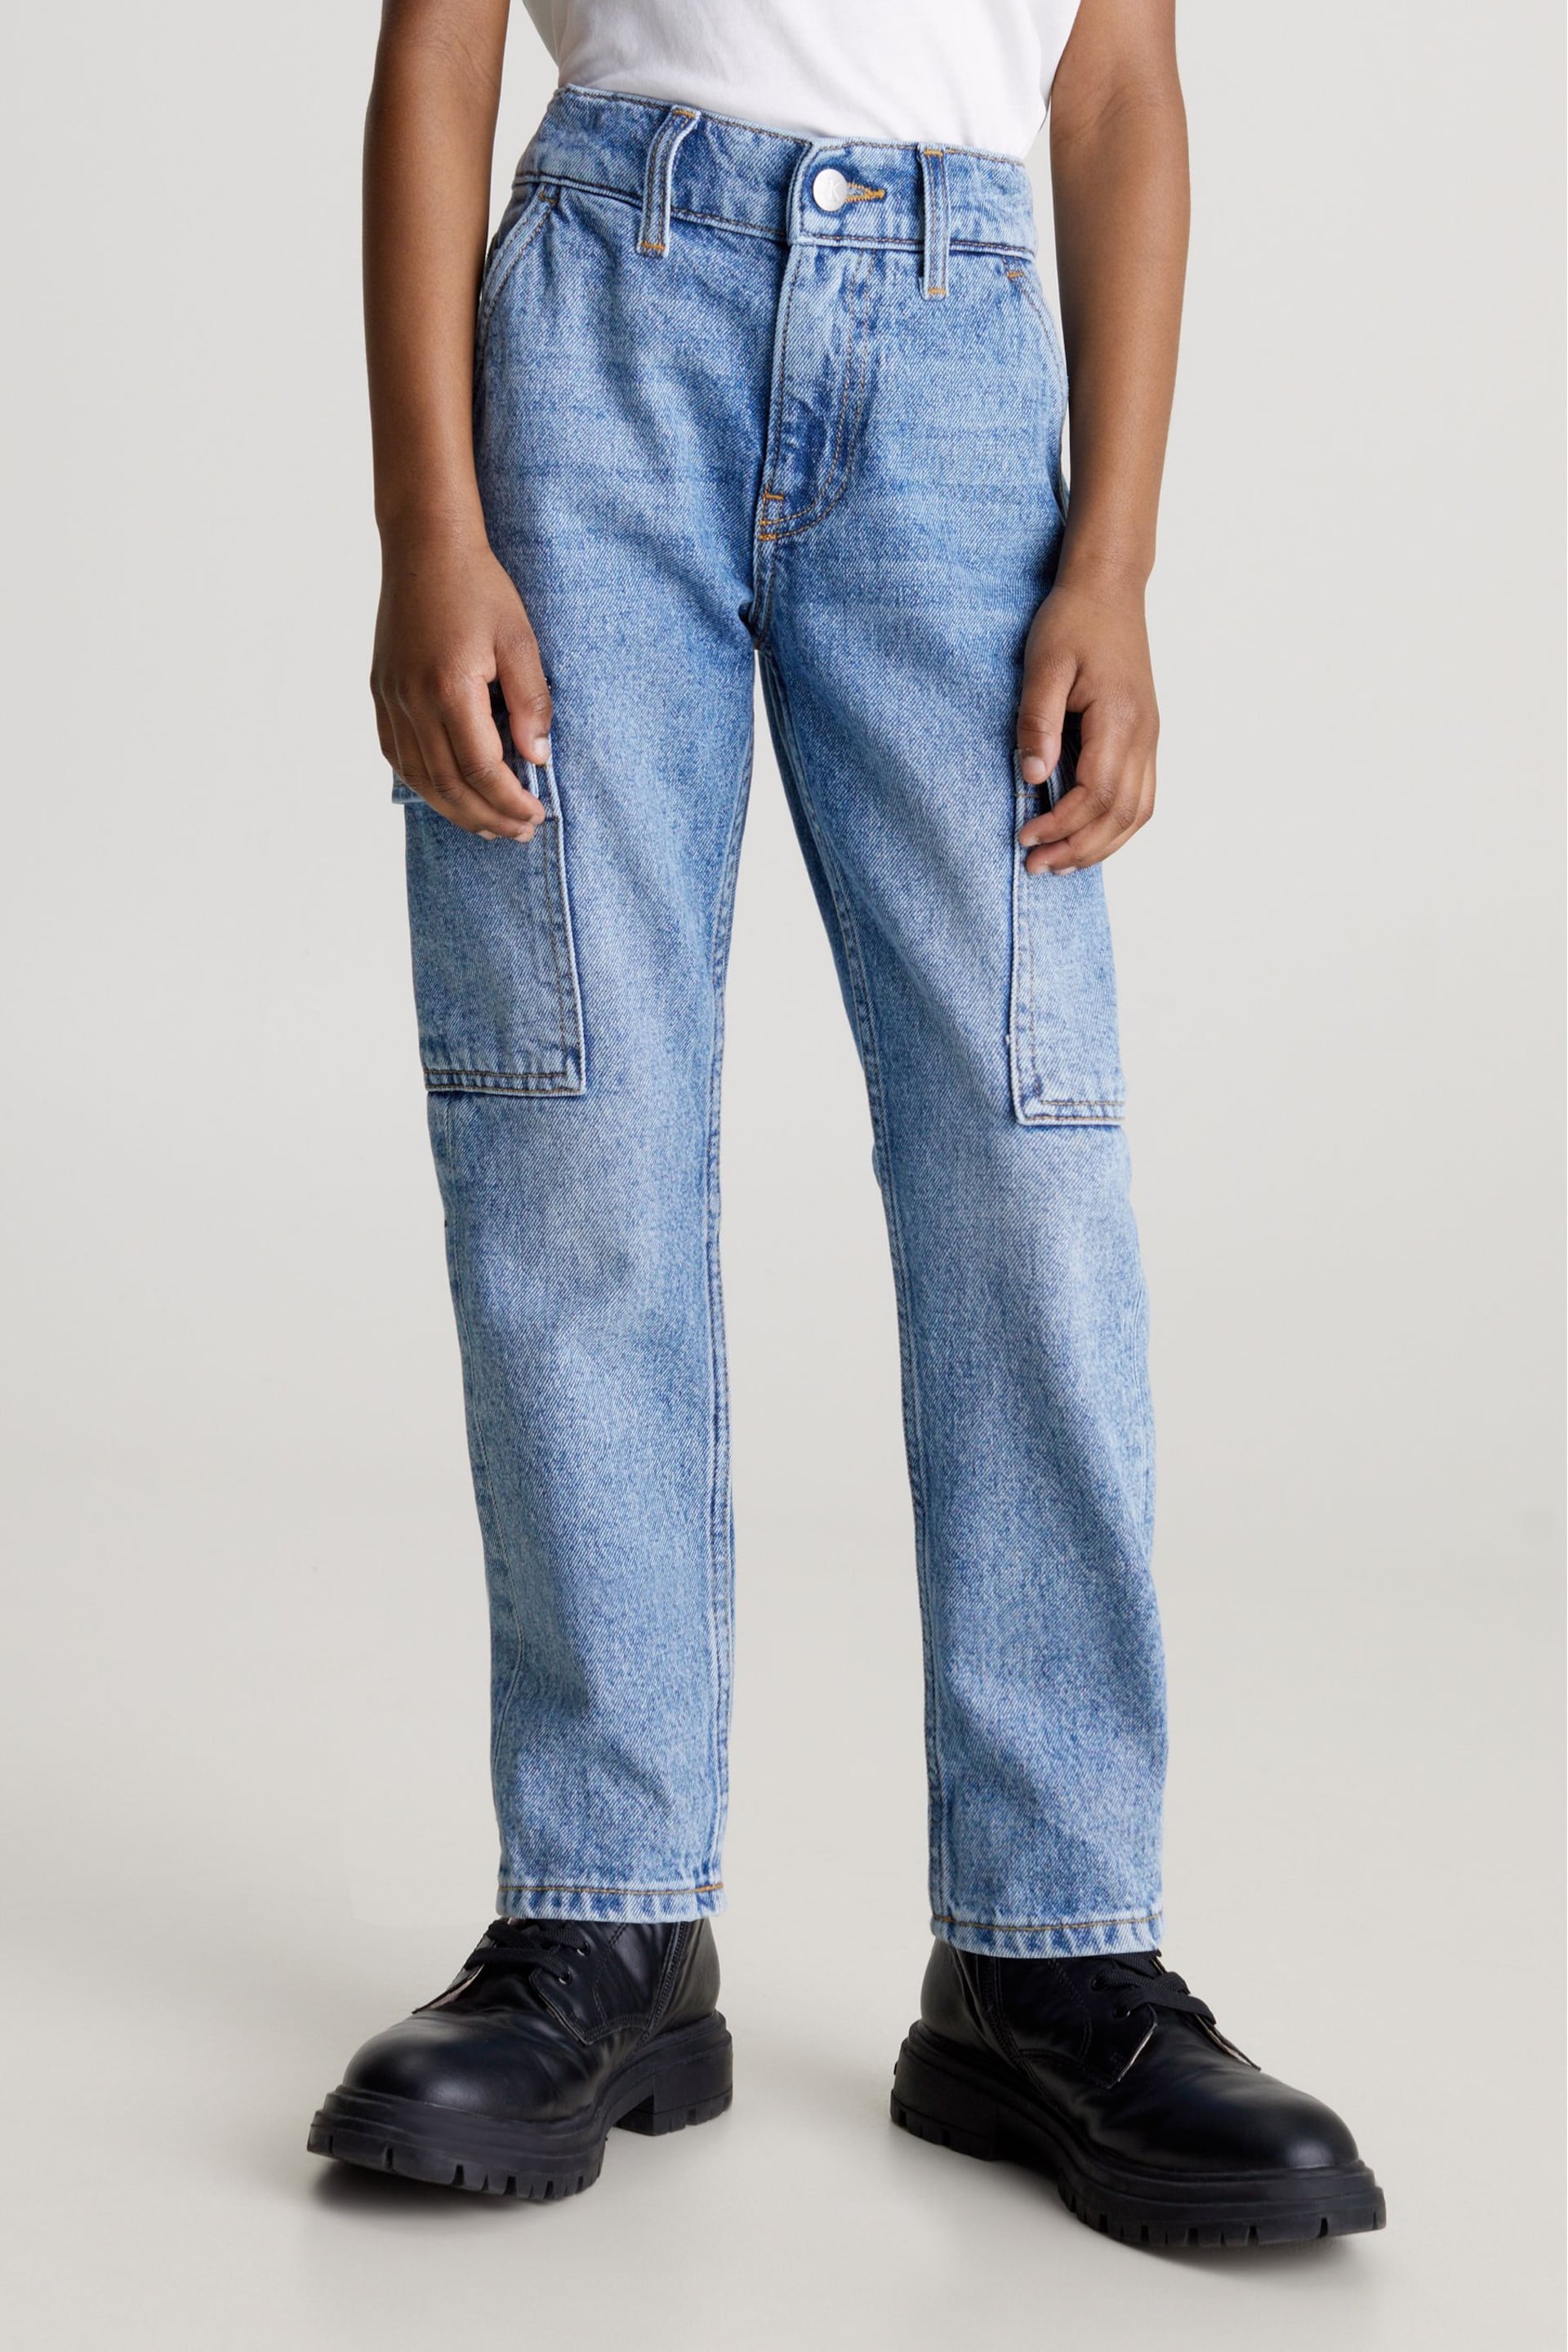 Calvin Klein Jeans Blue Cargo Denim Jeans - Image 1 of 4